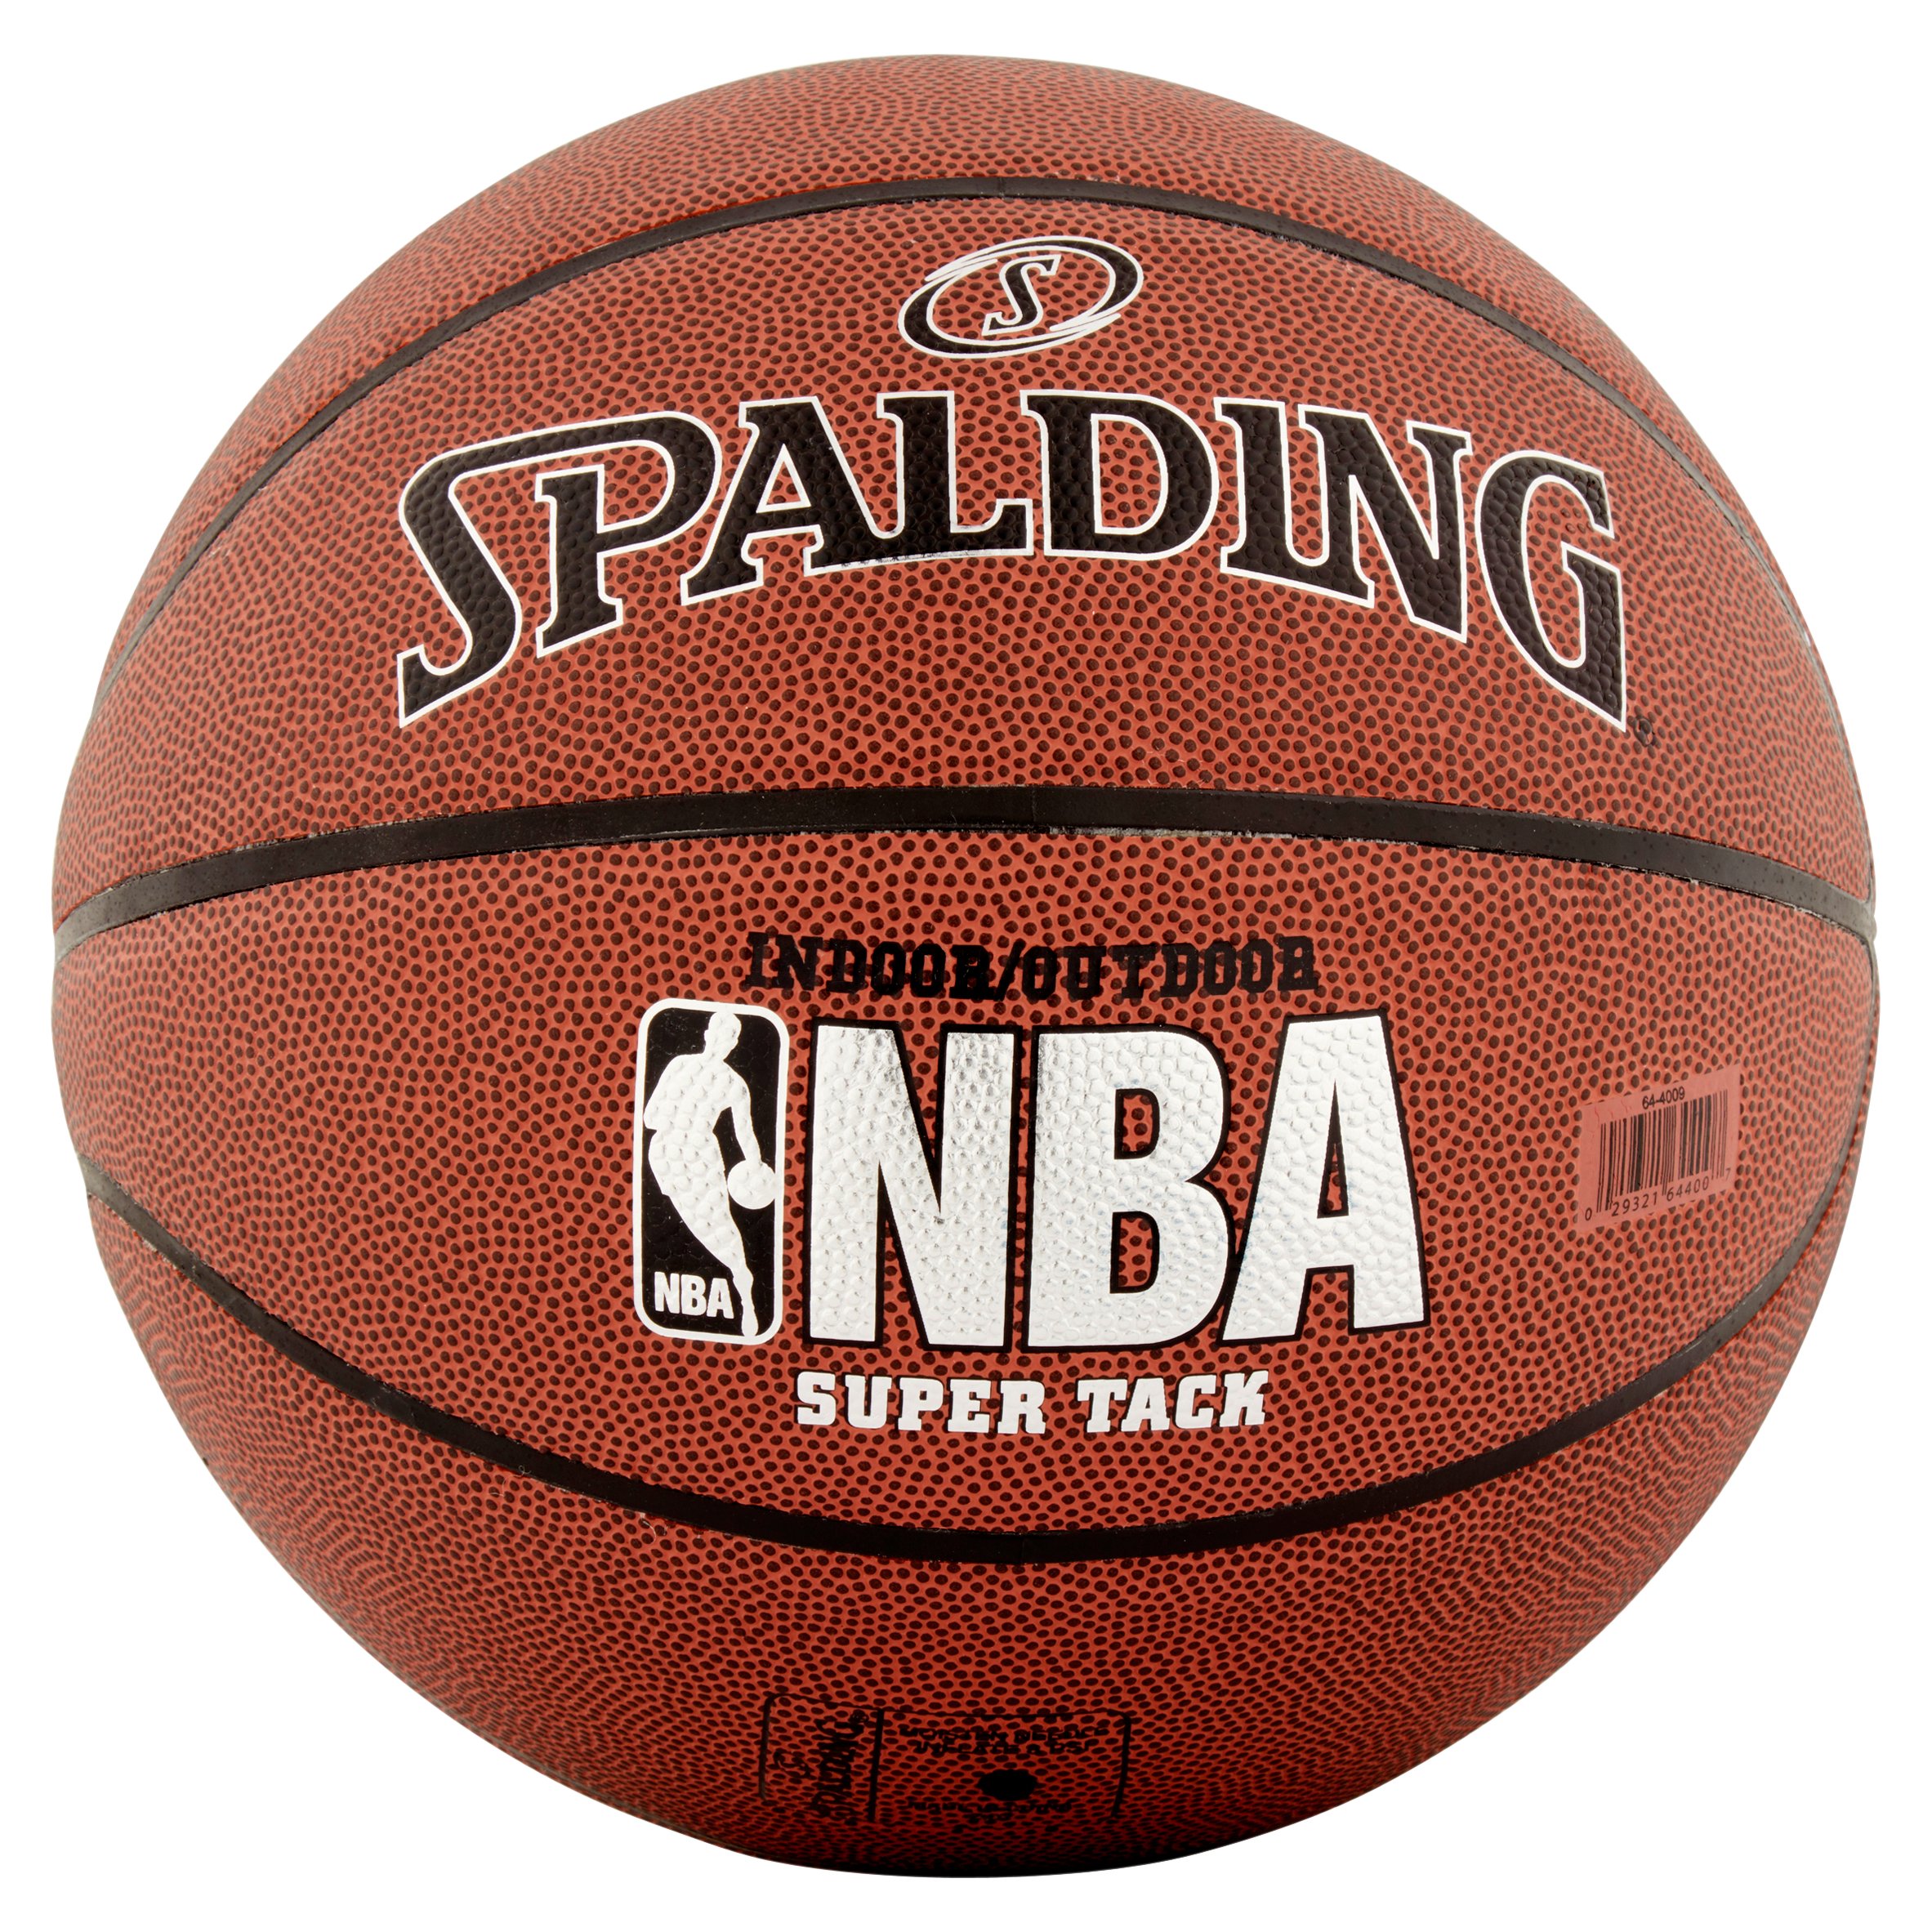 Spalding NBA Super Tack 29.5 Indoor/Outdoor Basketball - image 5 of 7